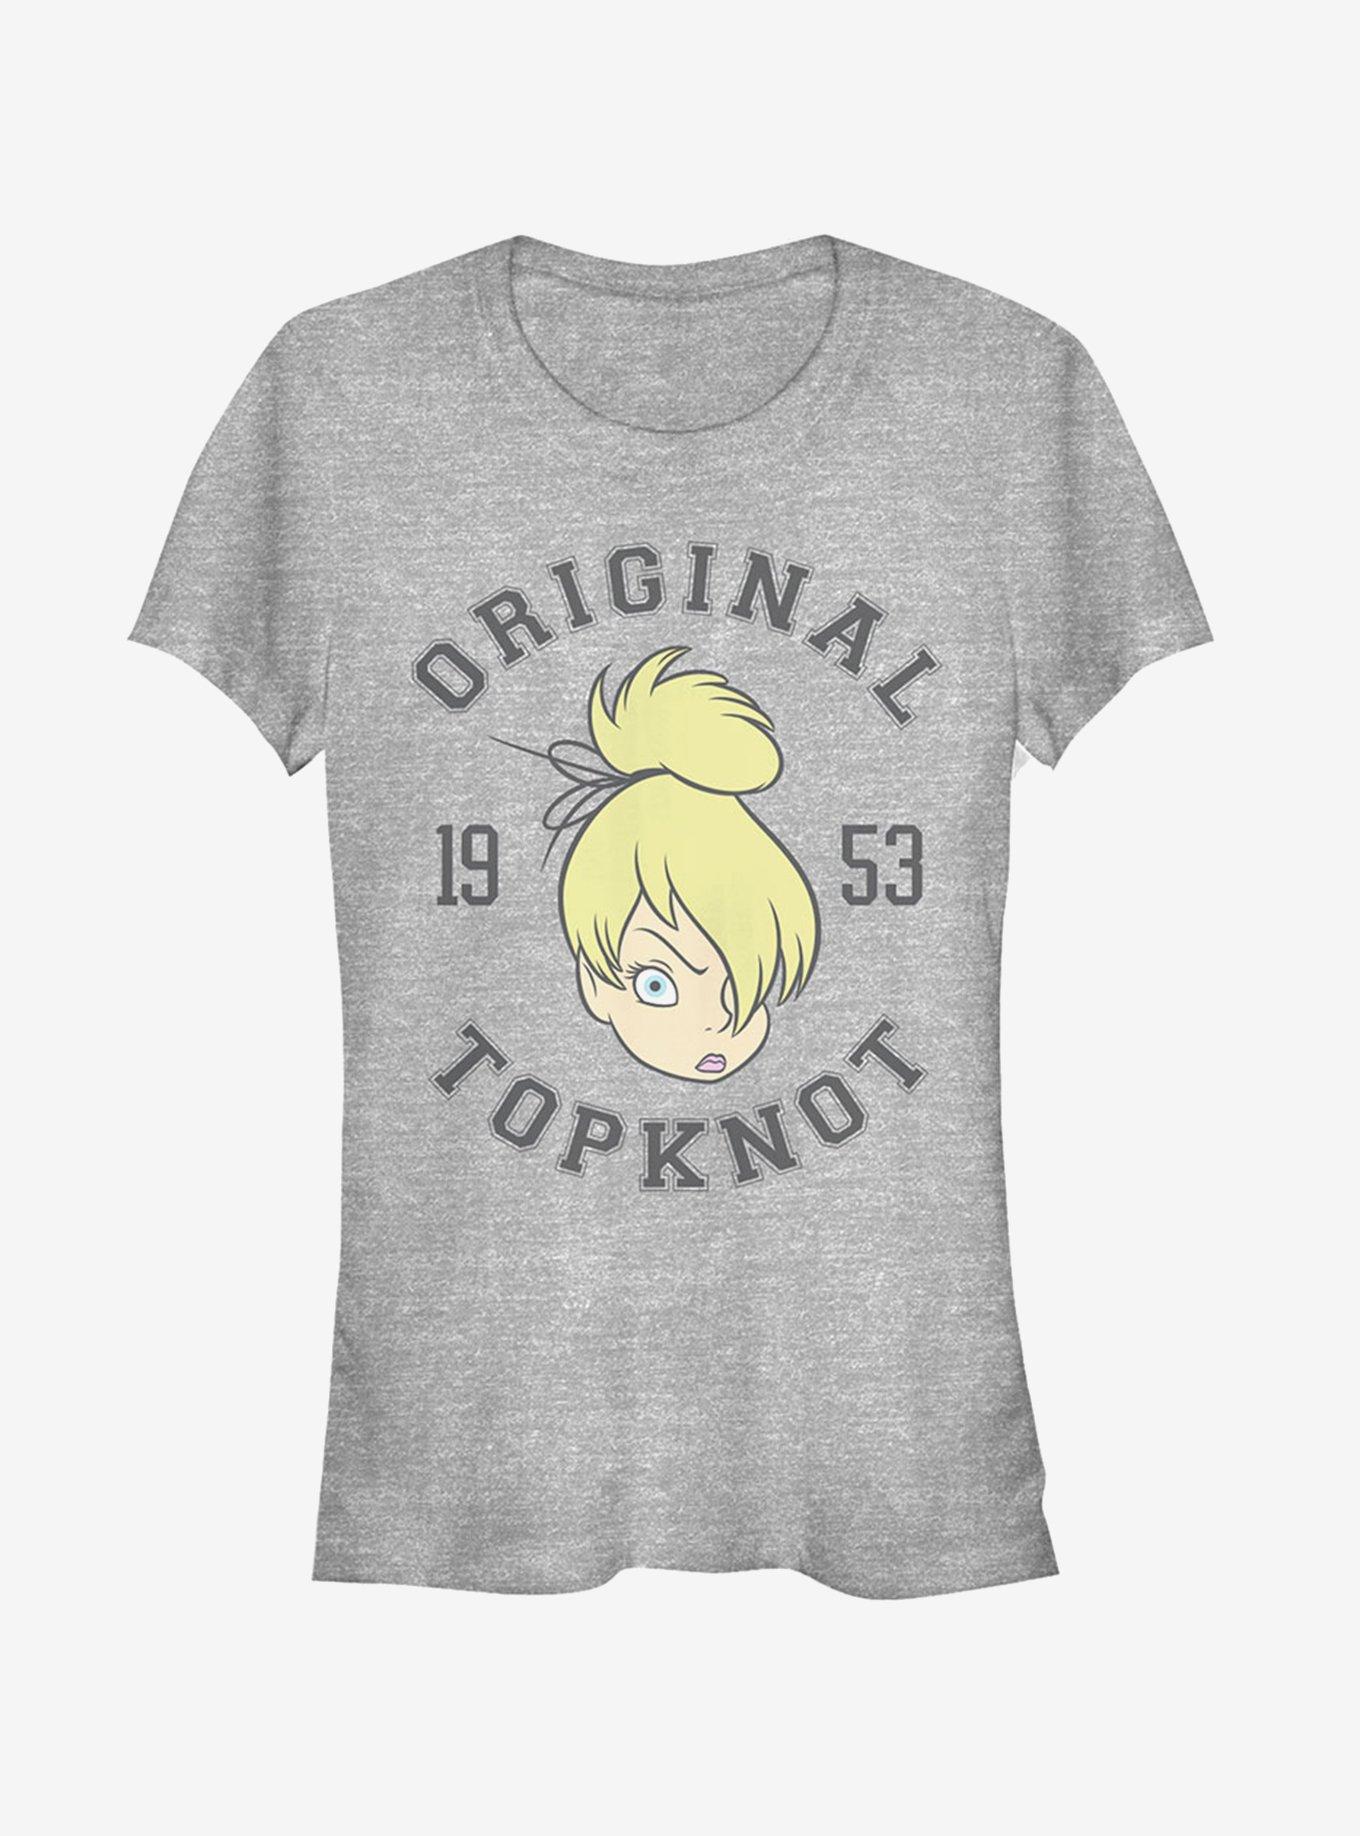 Disney Tinker Bell Topknot Girls T-Shirt